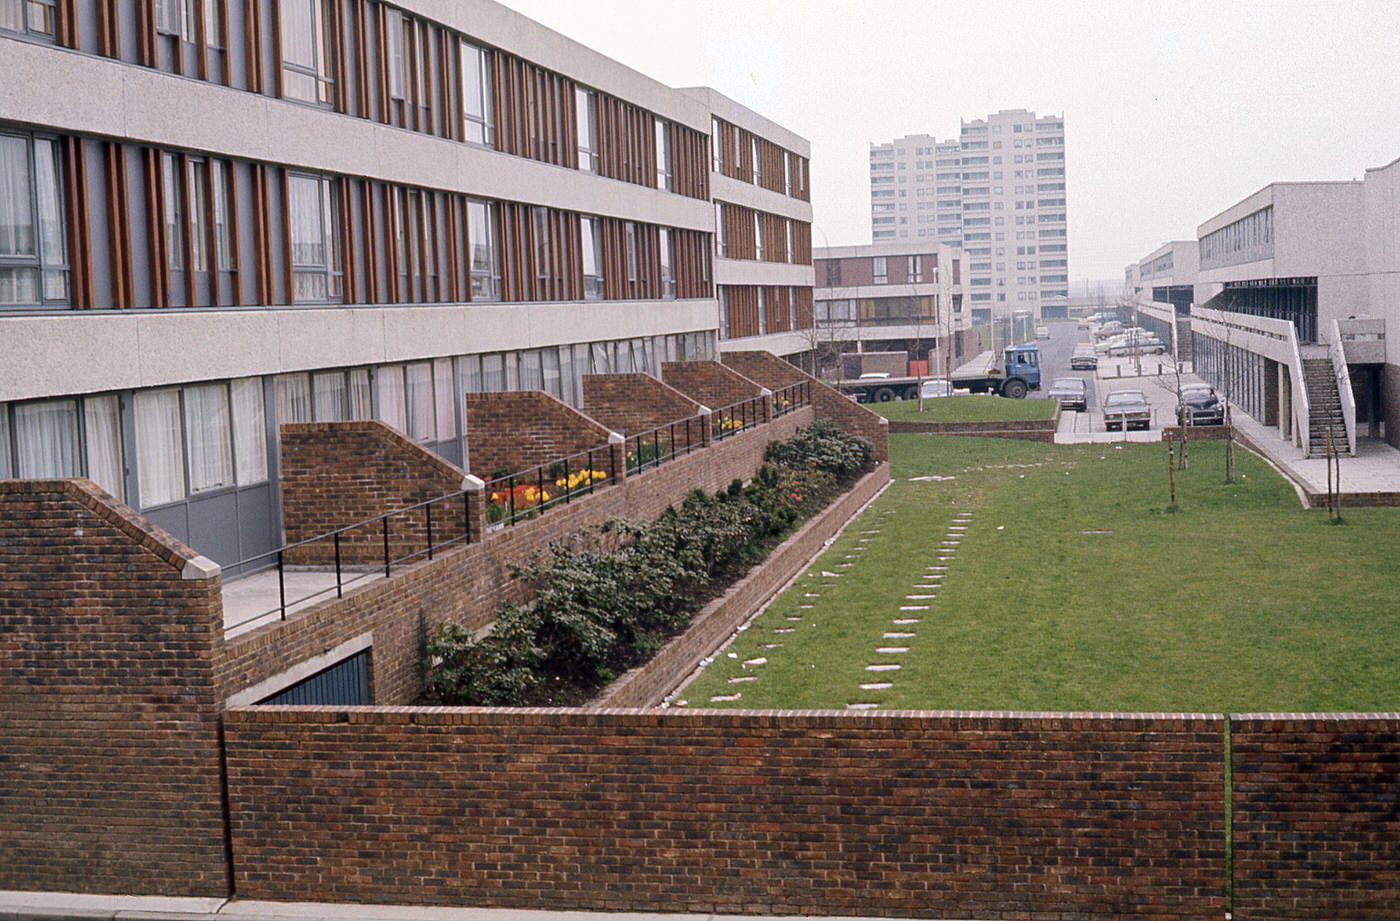 Thamesmead 1975: London's Lofty Concrete Dream Turned Sour